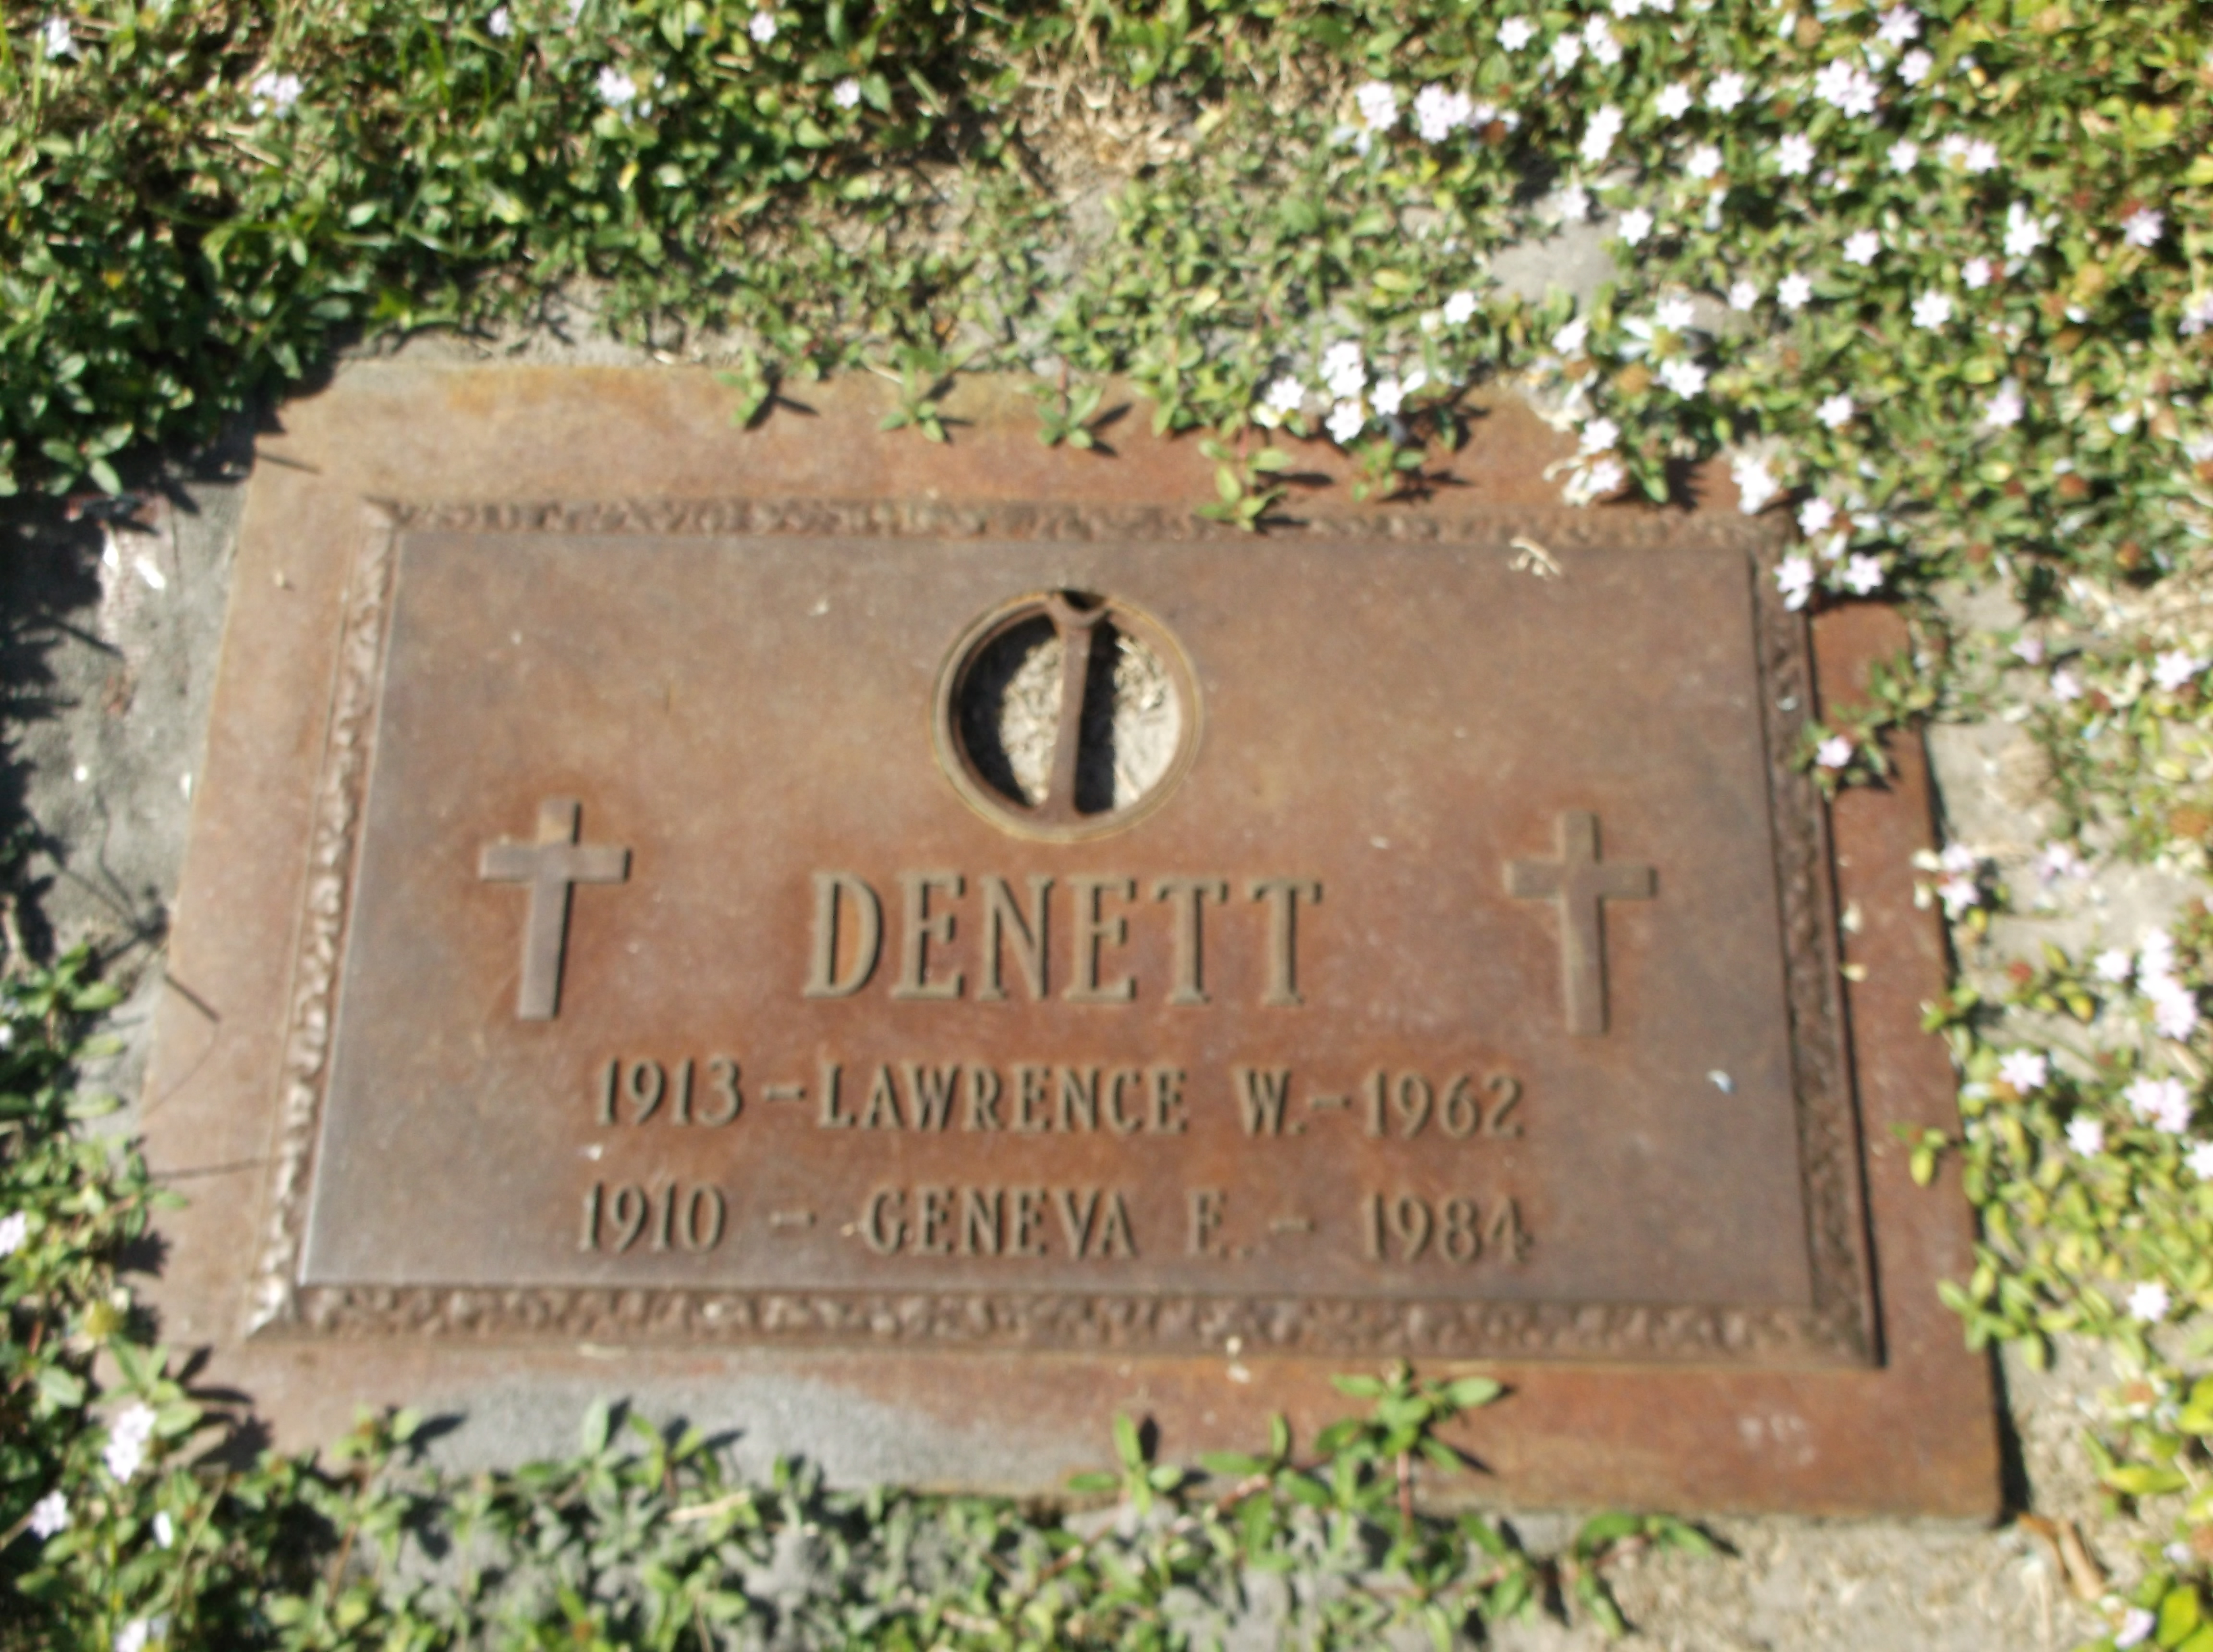 Lawrence W Denett